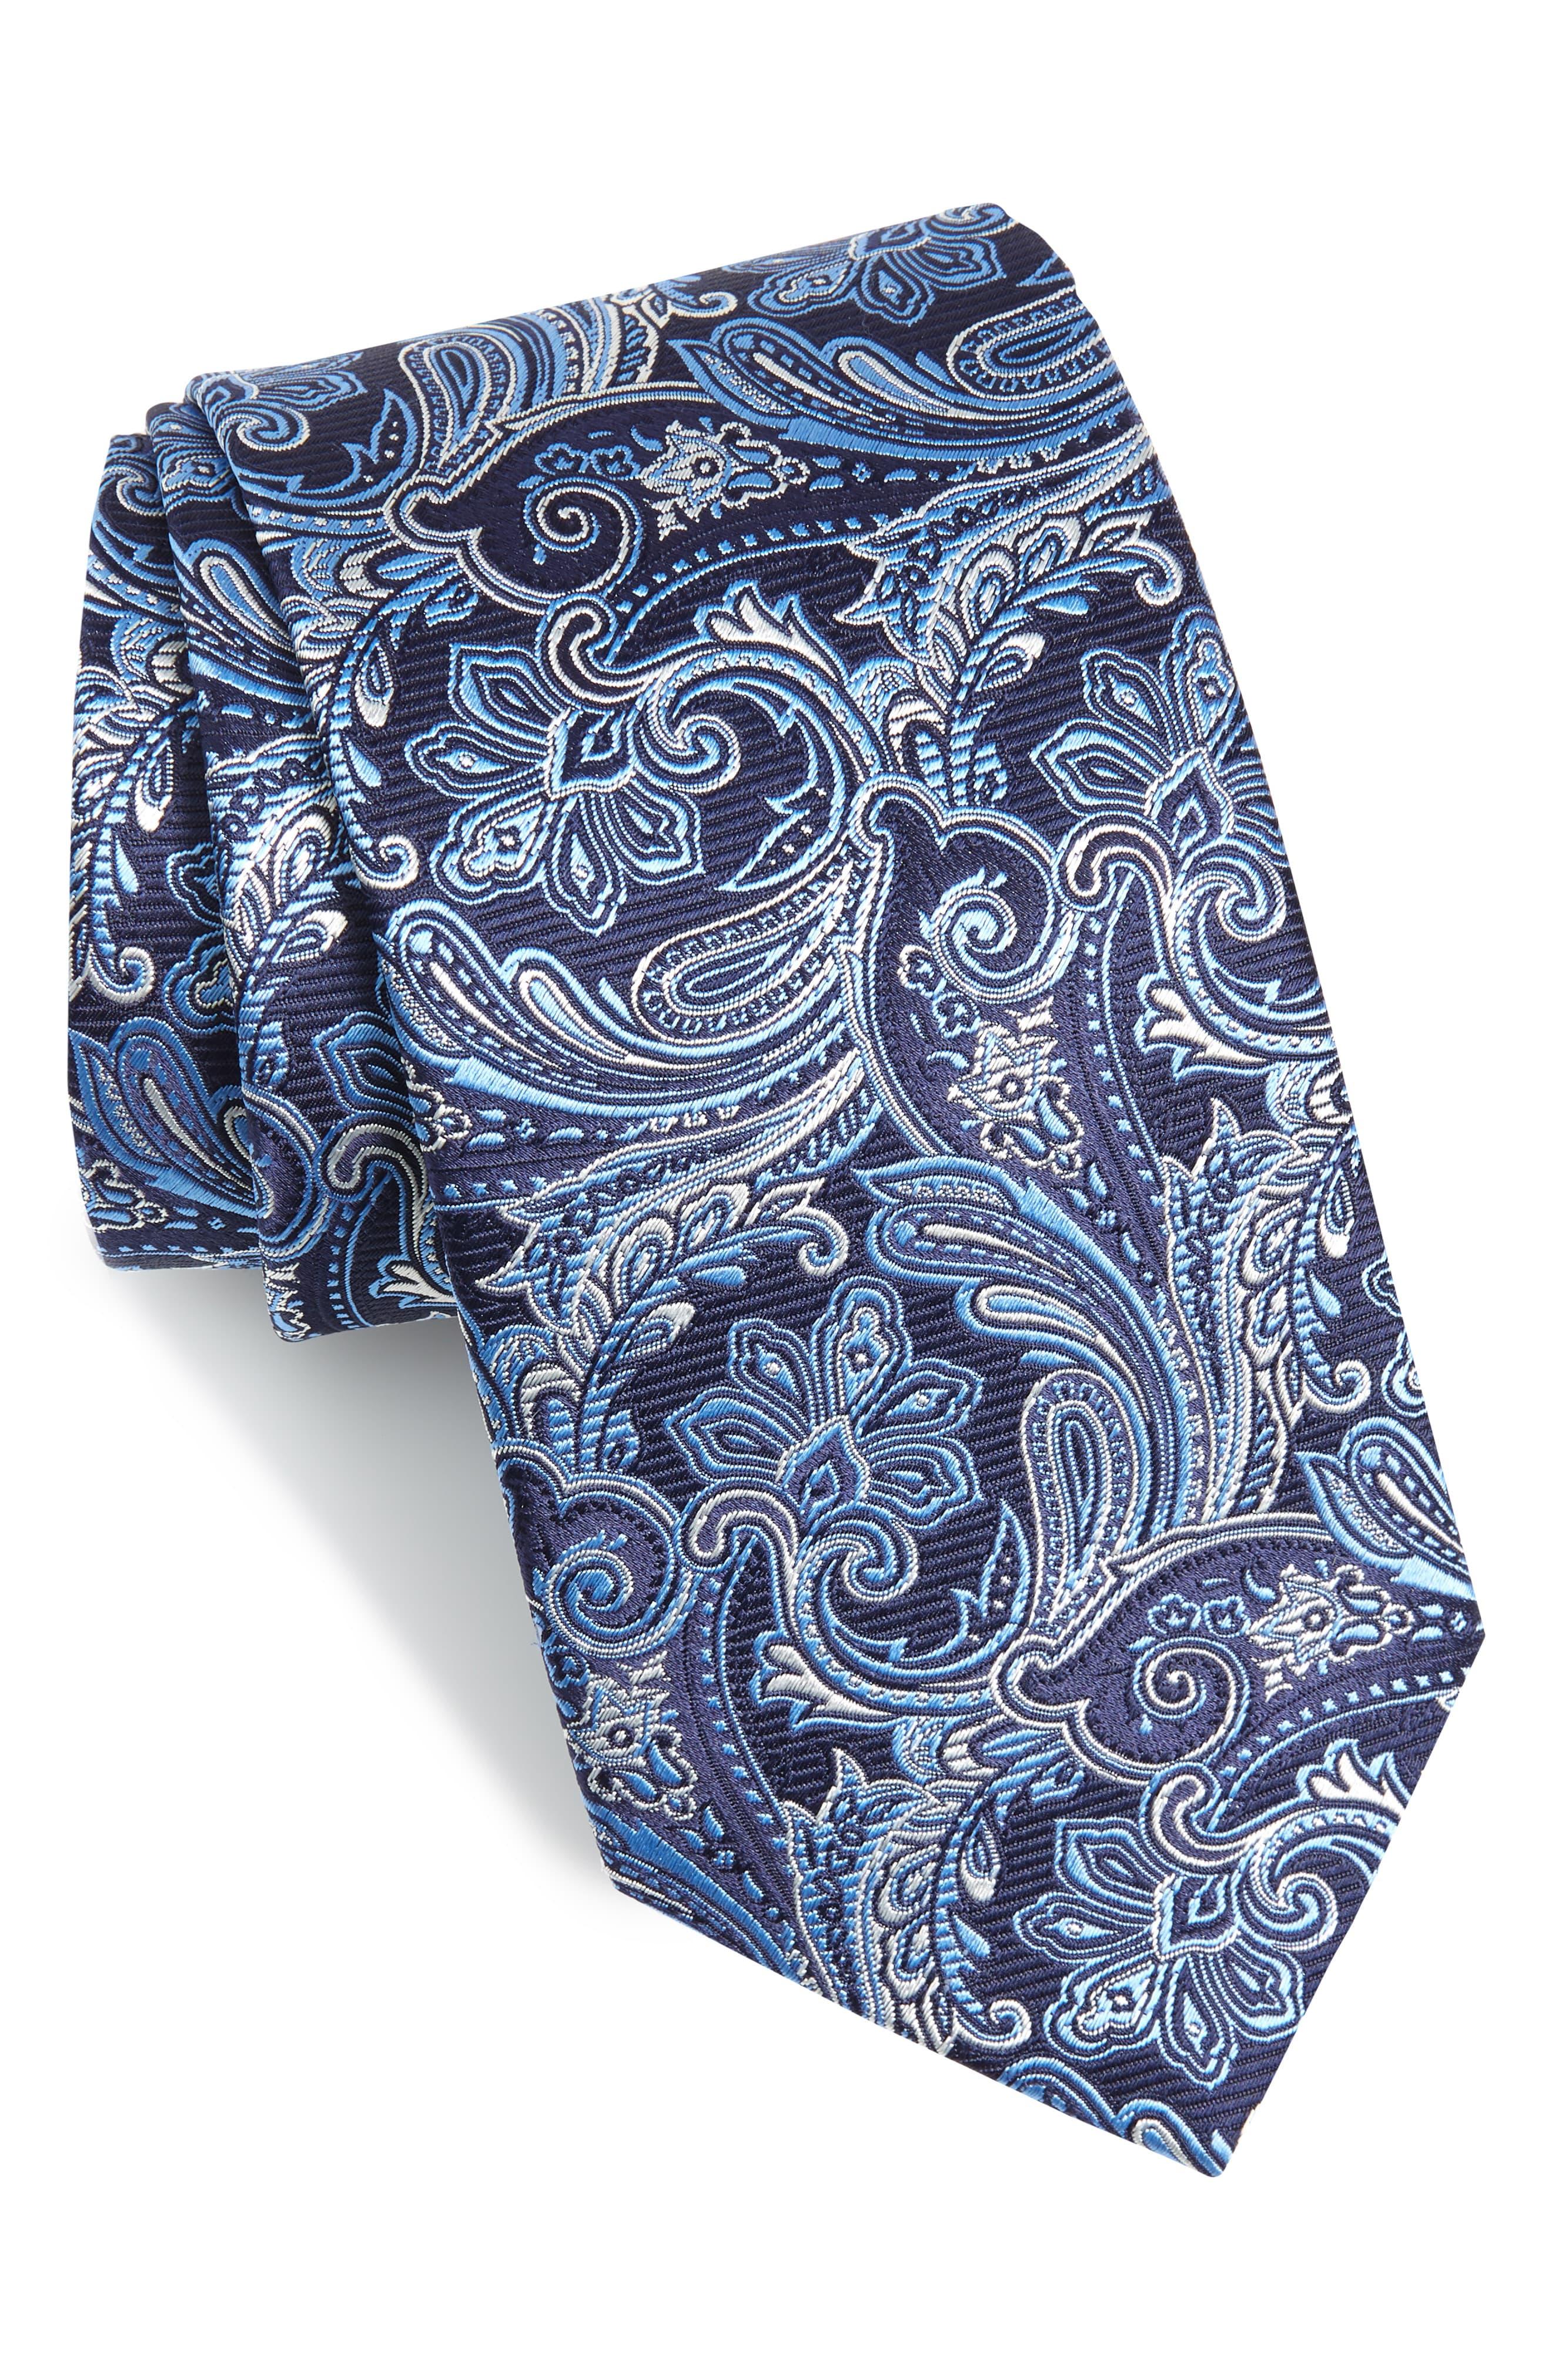 Eton of Sweden Paisley Silk Tie in Blue for Men - Lyst